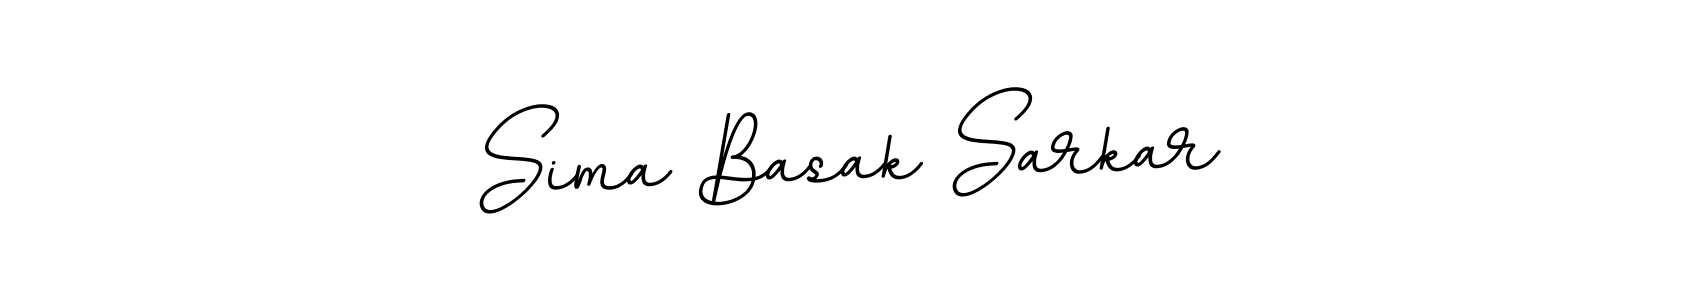 How to Draw Sima Basak Sarkar signature style? BallpointsItalic-DORy9 is a latest design signature styles for name Sima Basak Sarkar. Sima Basak Sarkar signature style 11 images and pictures png